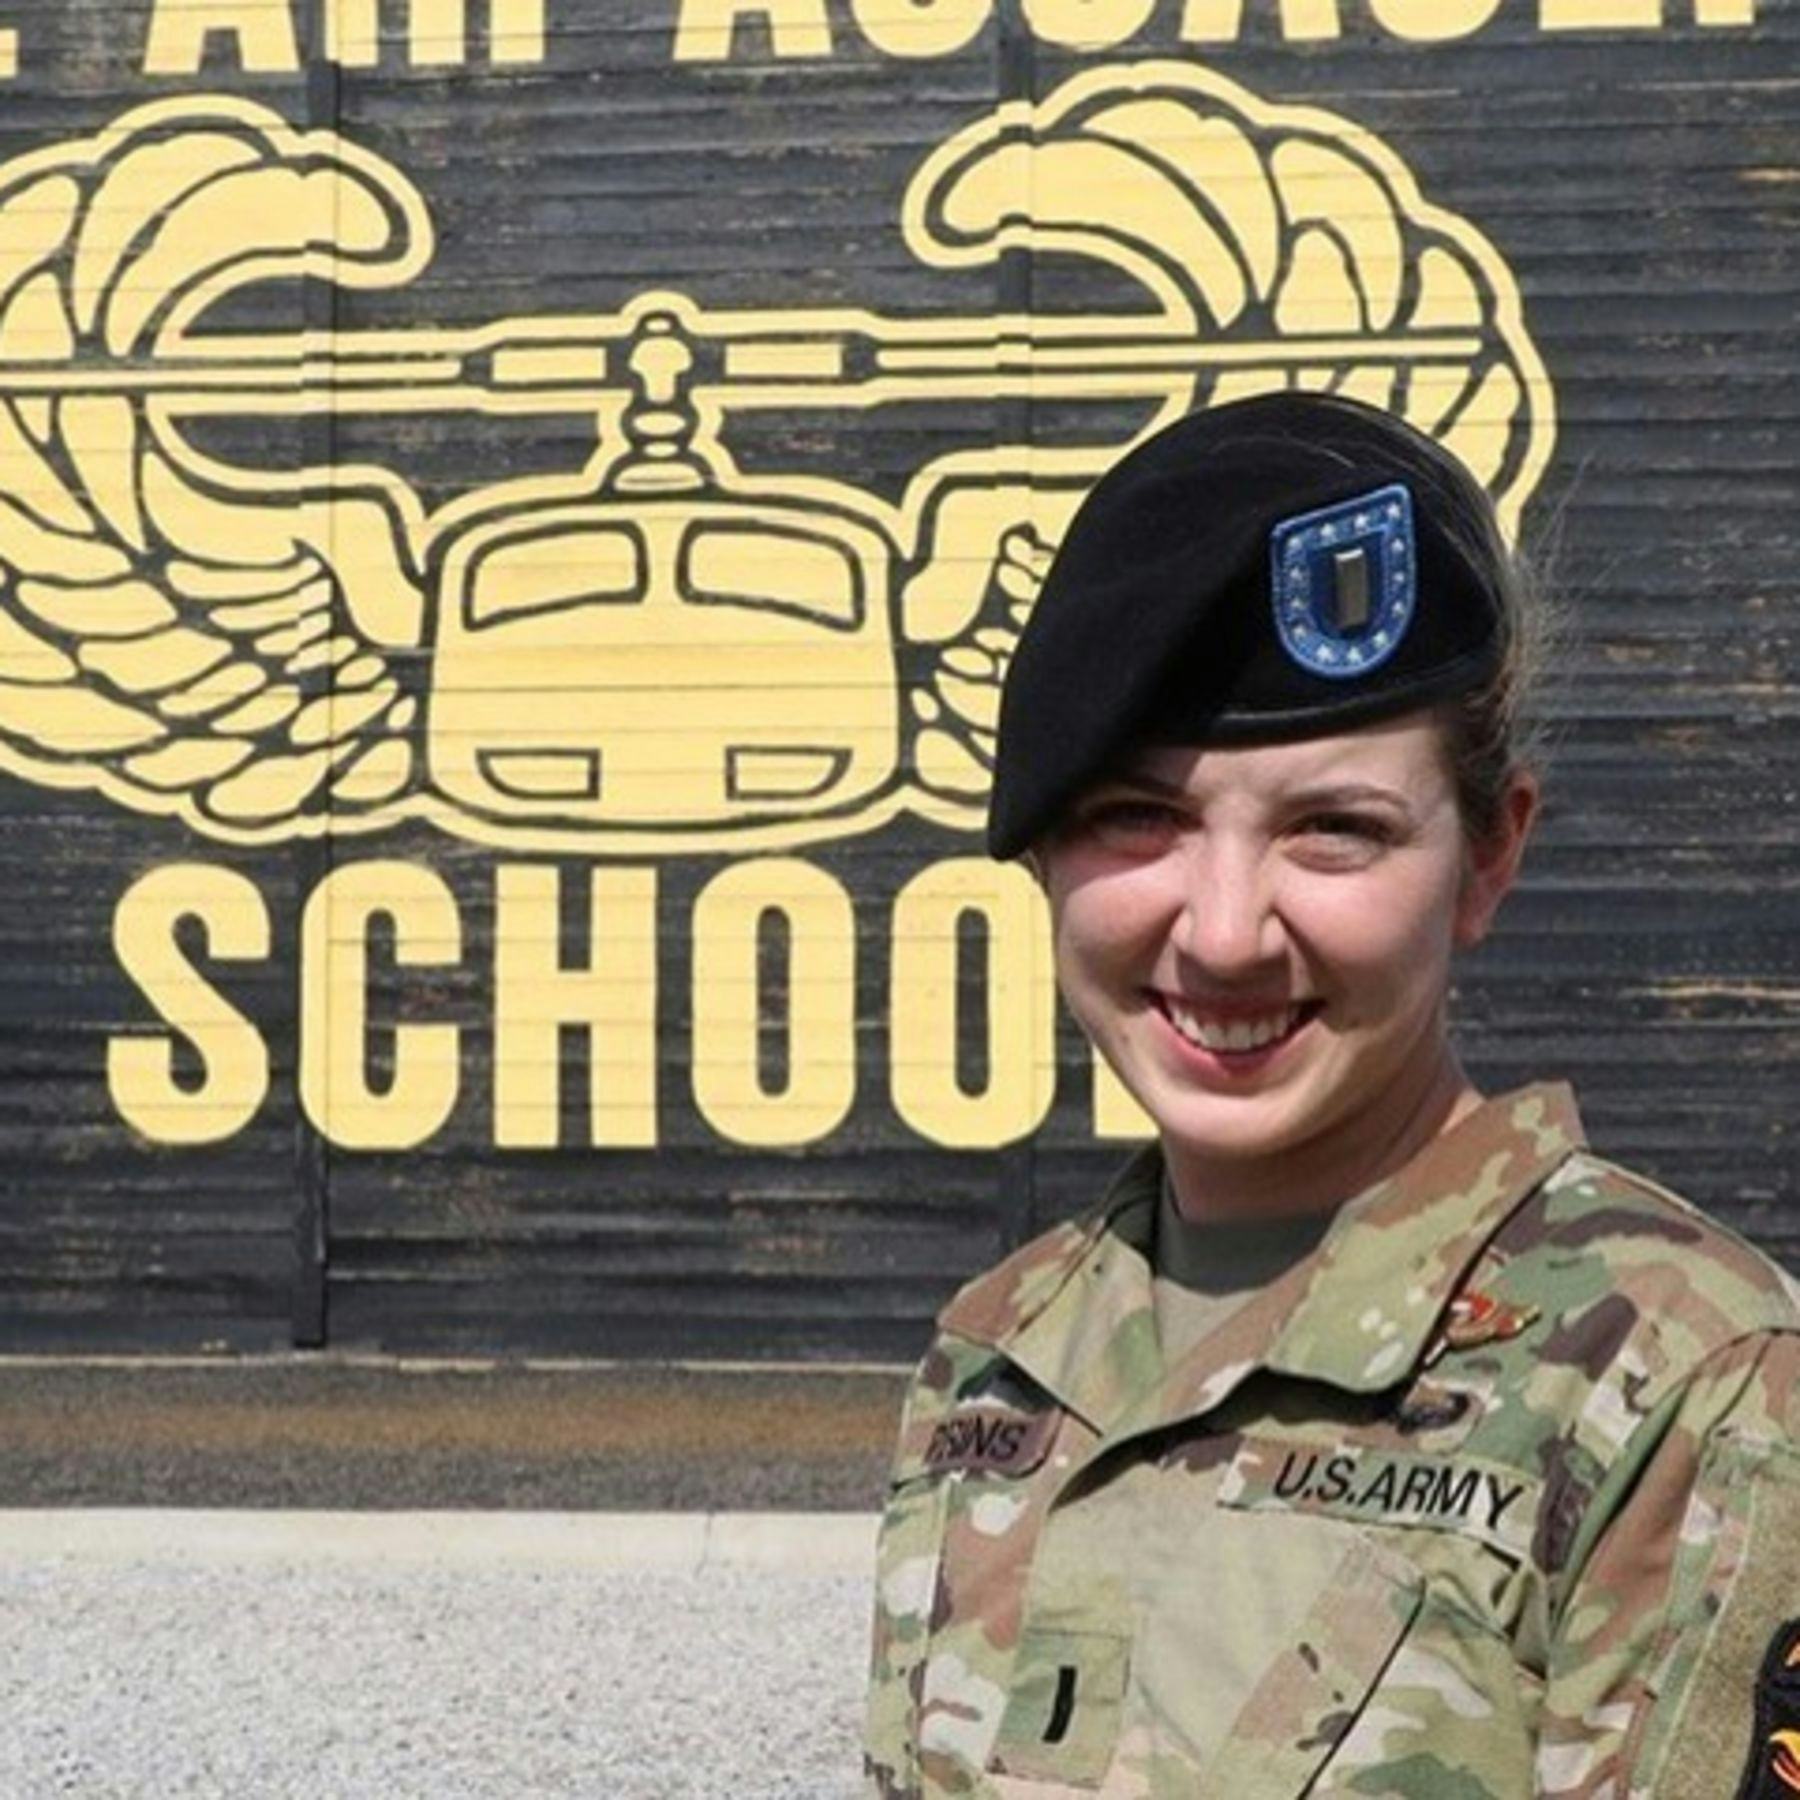 Female in Army camouflage uniform 